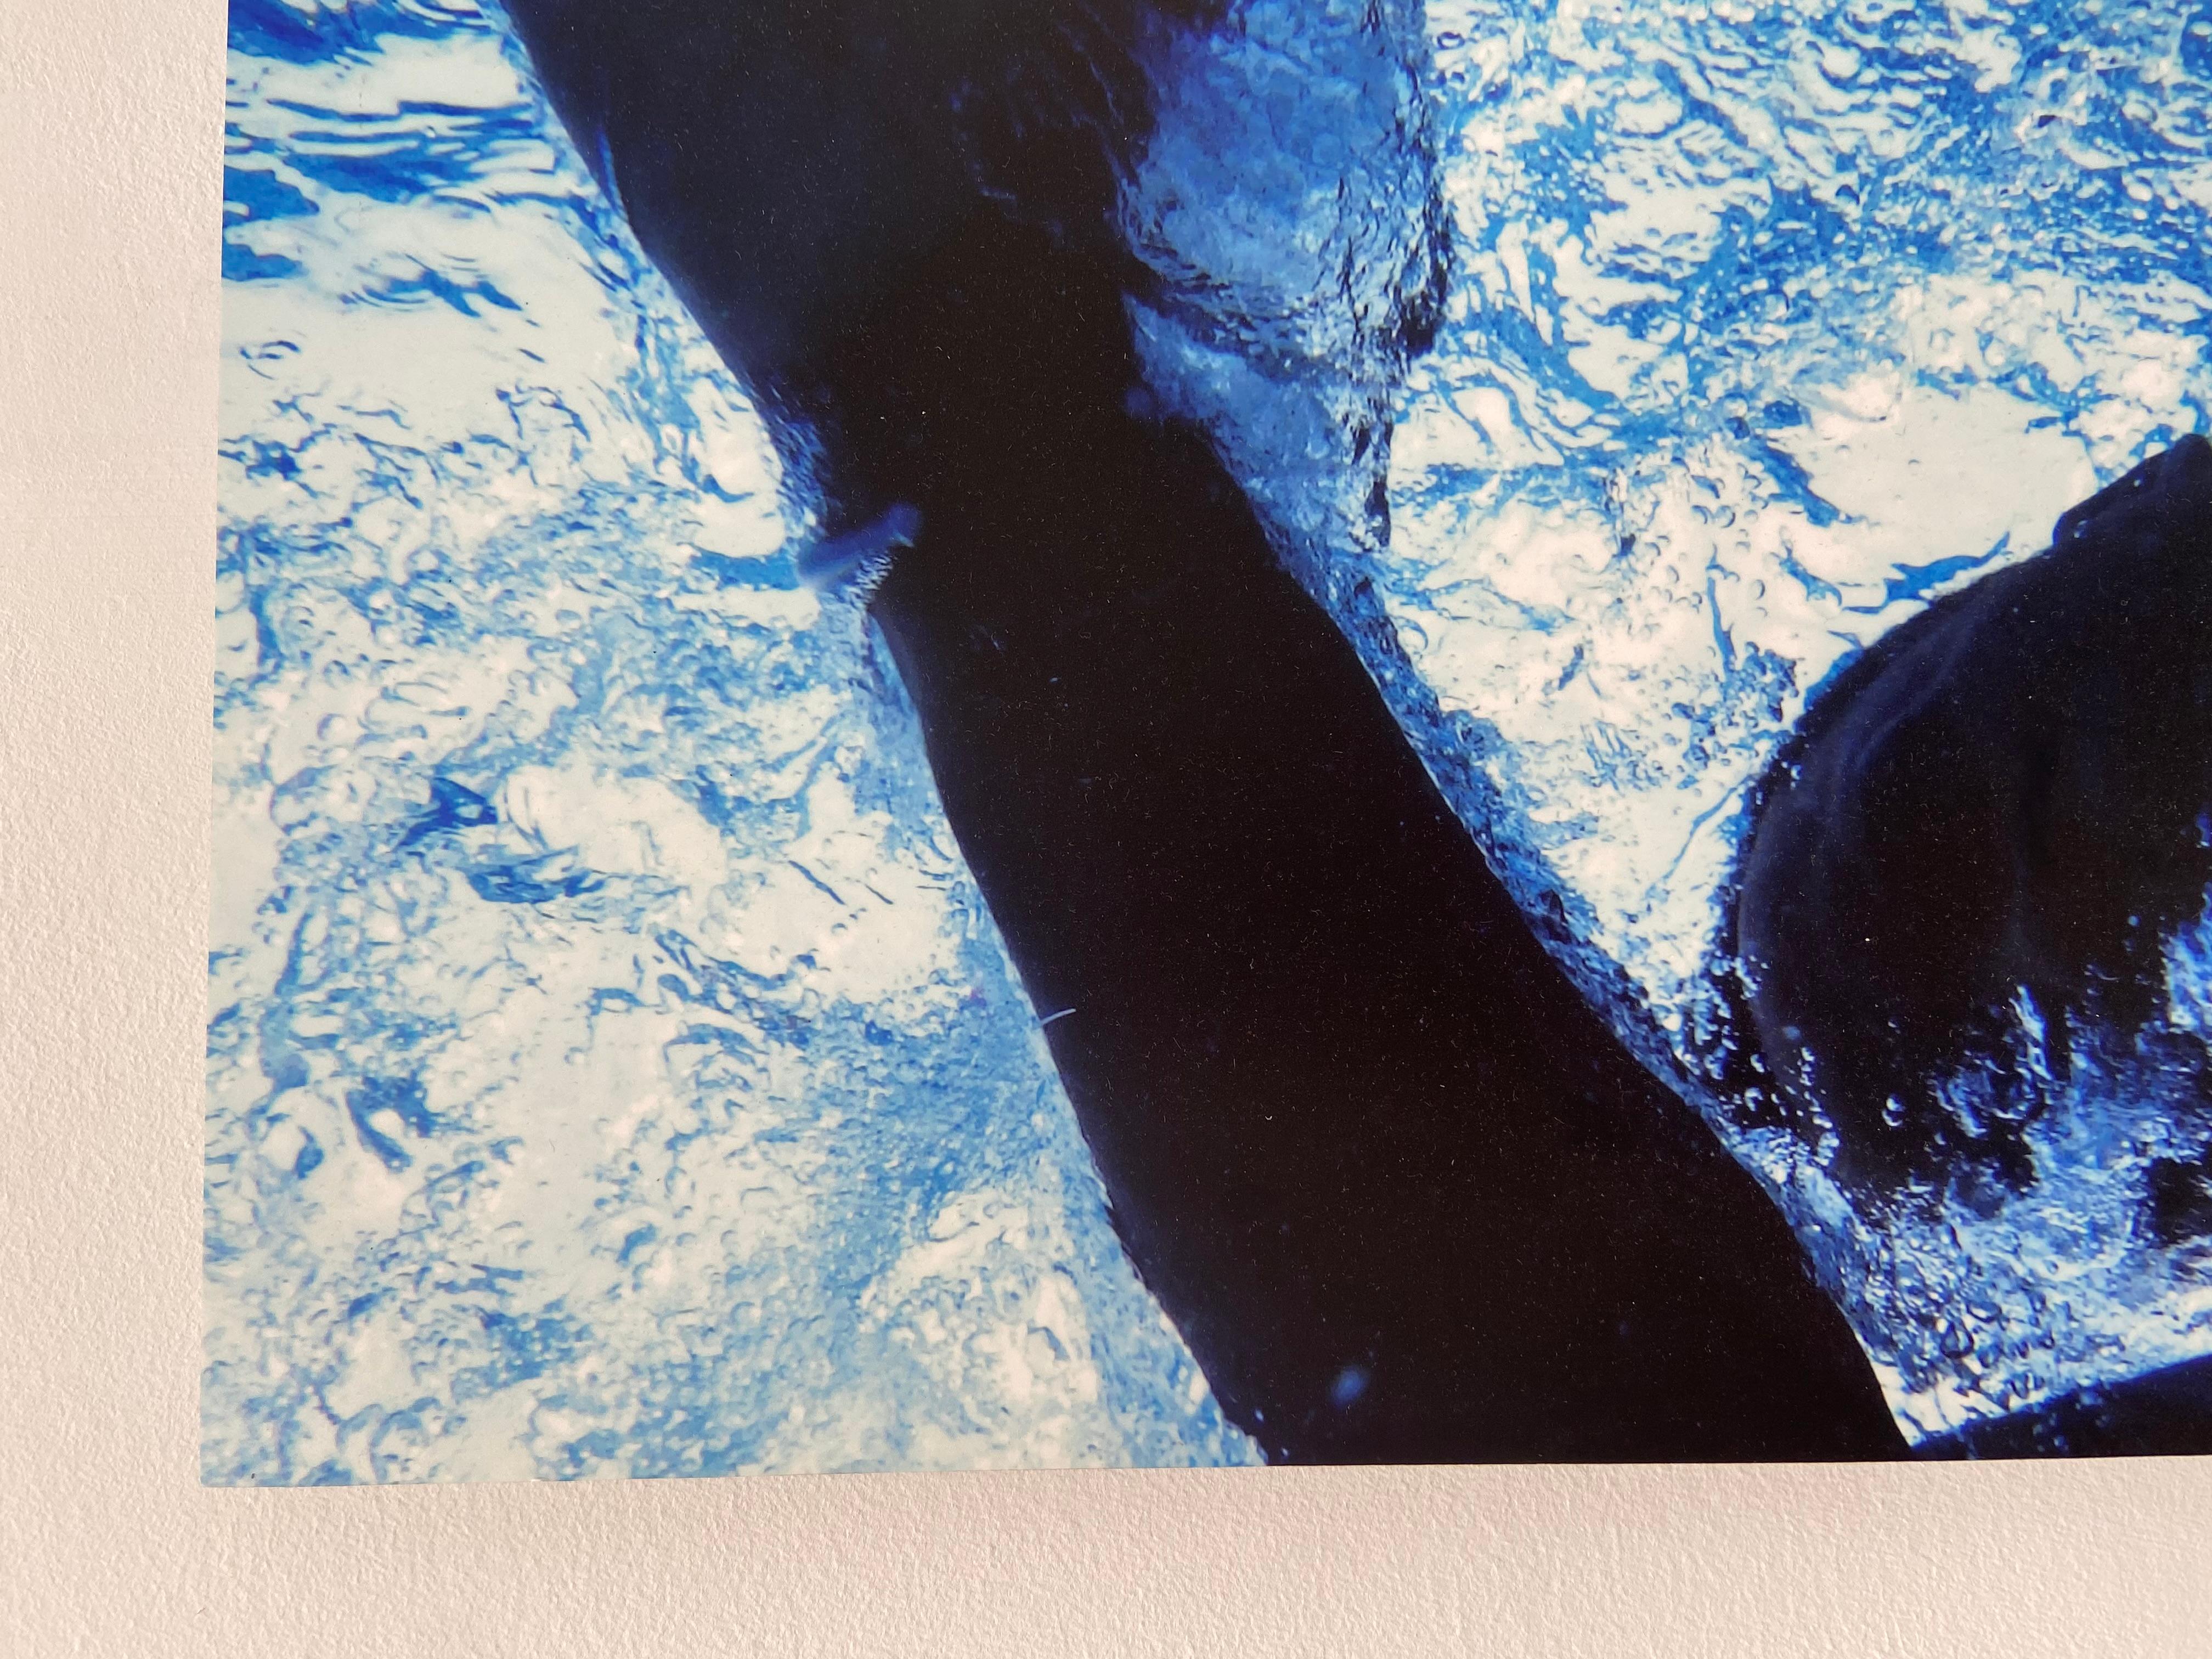 Jarmo Pikkujamsa
Deep III - Meissa, 2018
Photograph on Hahnemuhle Gloss Baryta archival paper
19.69 x 19.69 inches  (50 x 50 cm)
Edition 1/10